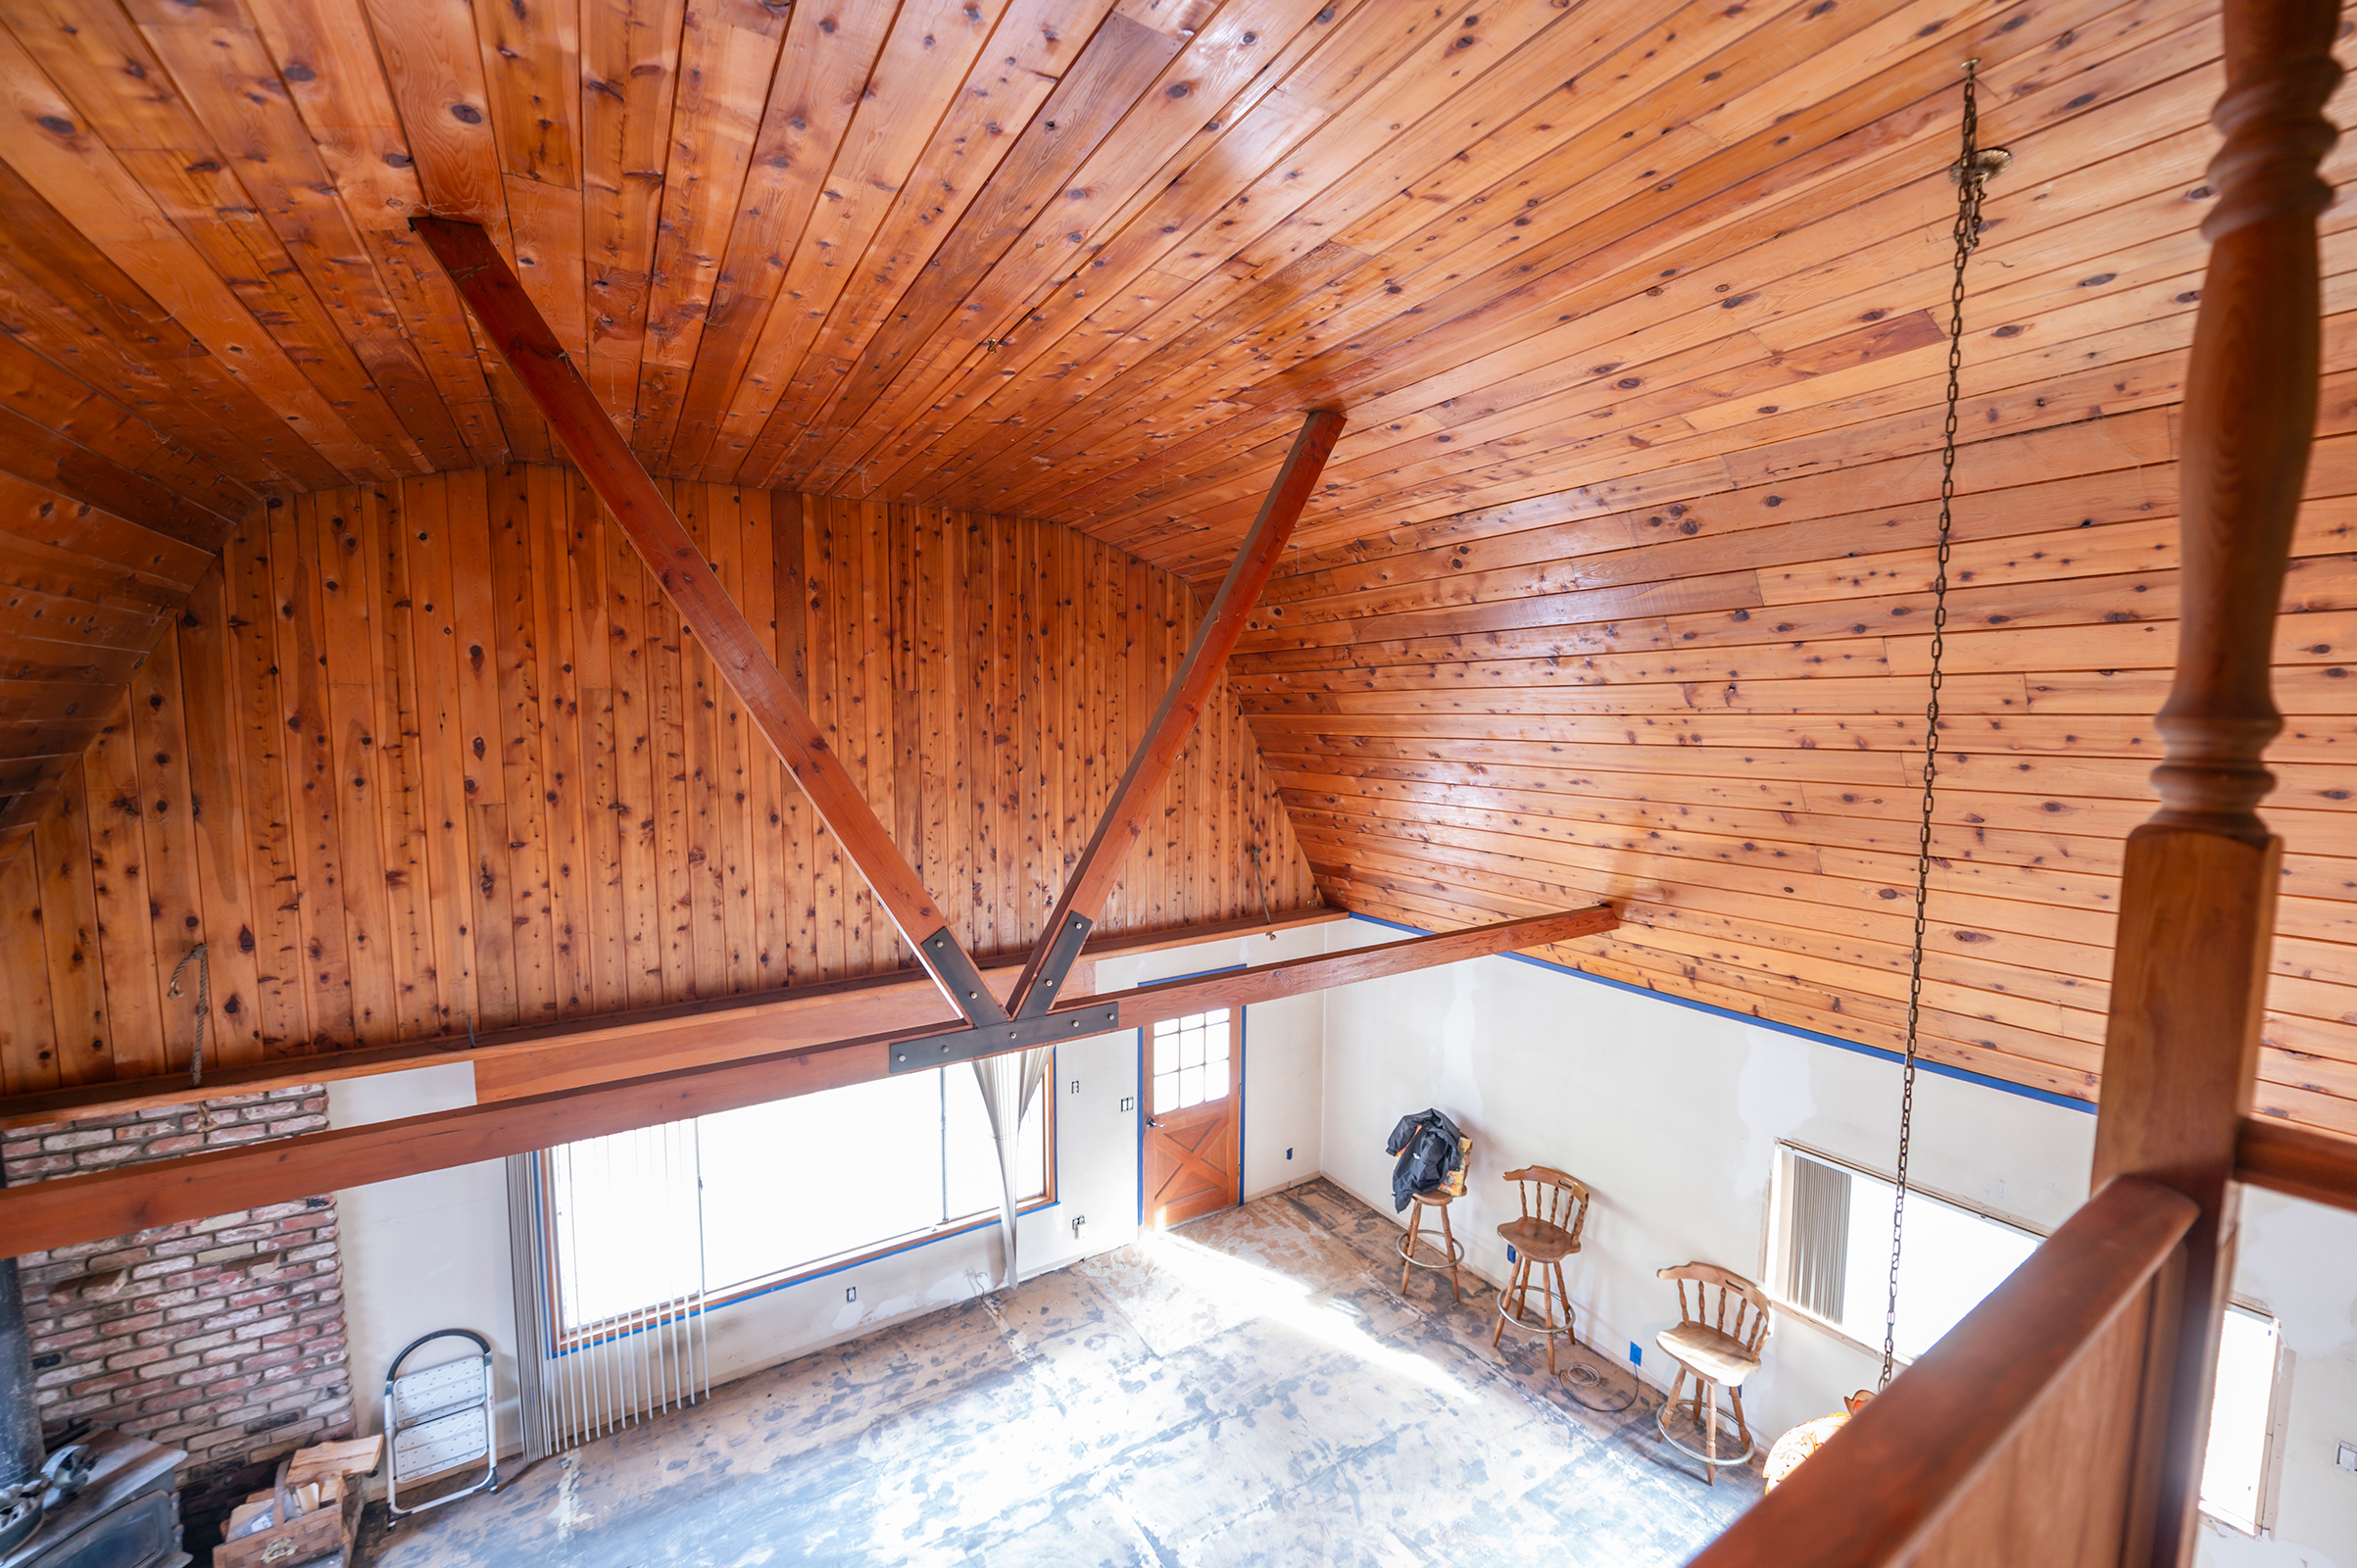 Beautiful barn wood interior